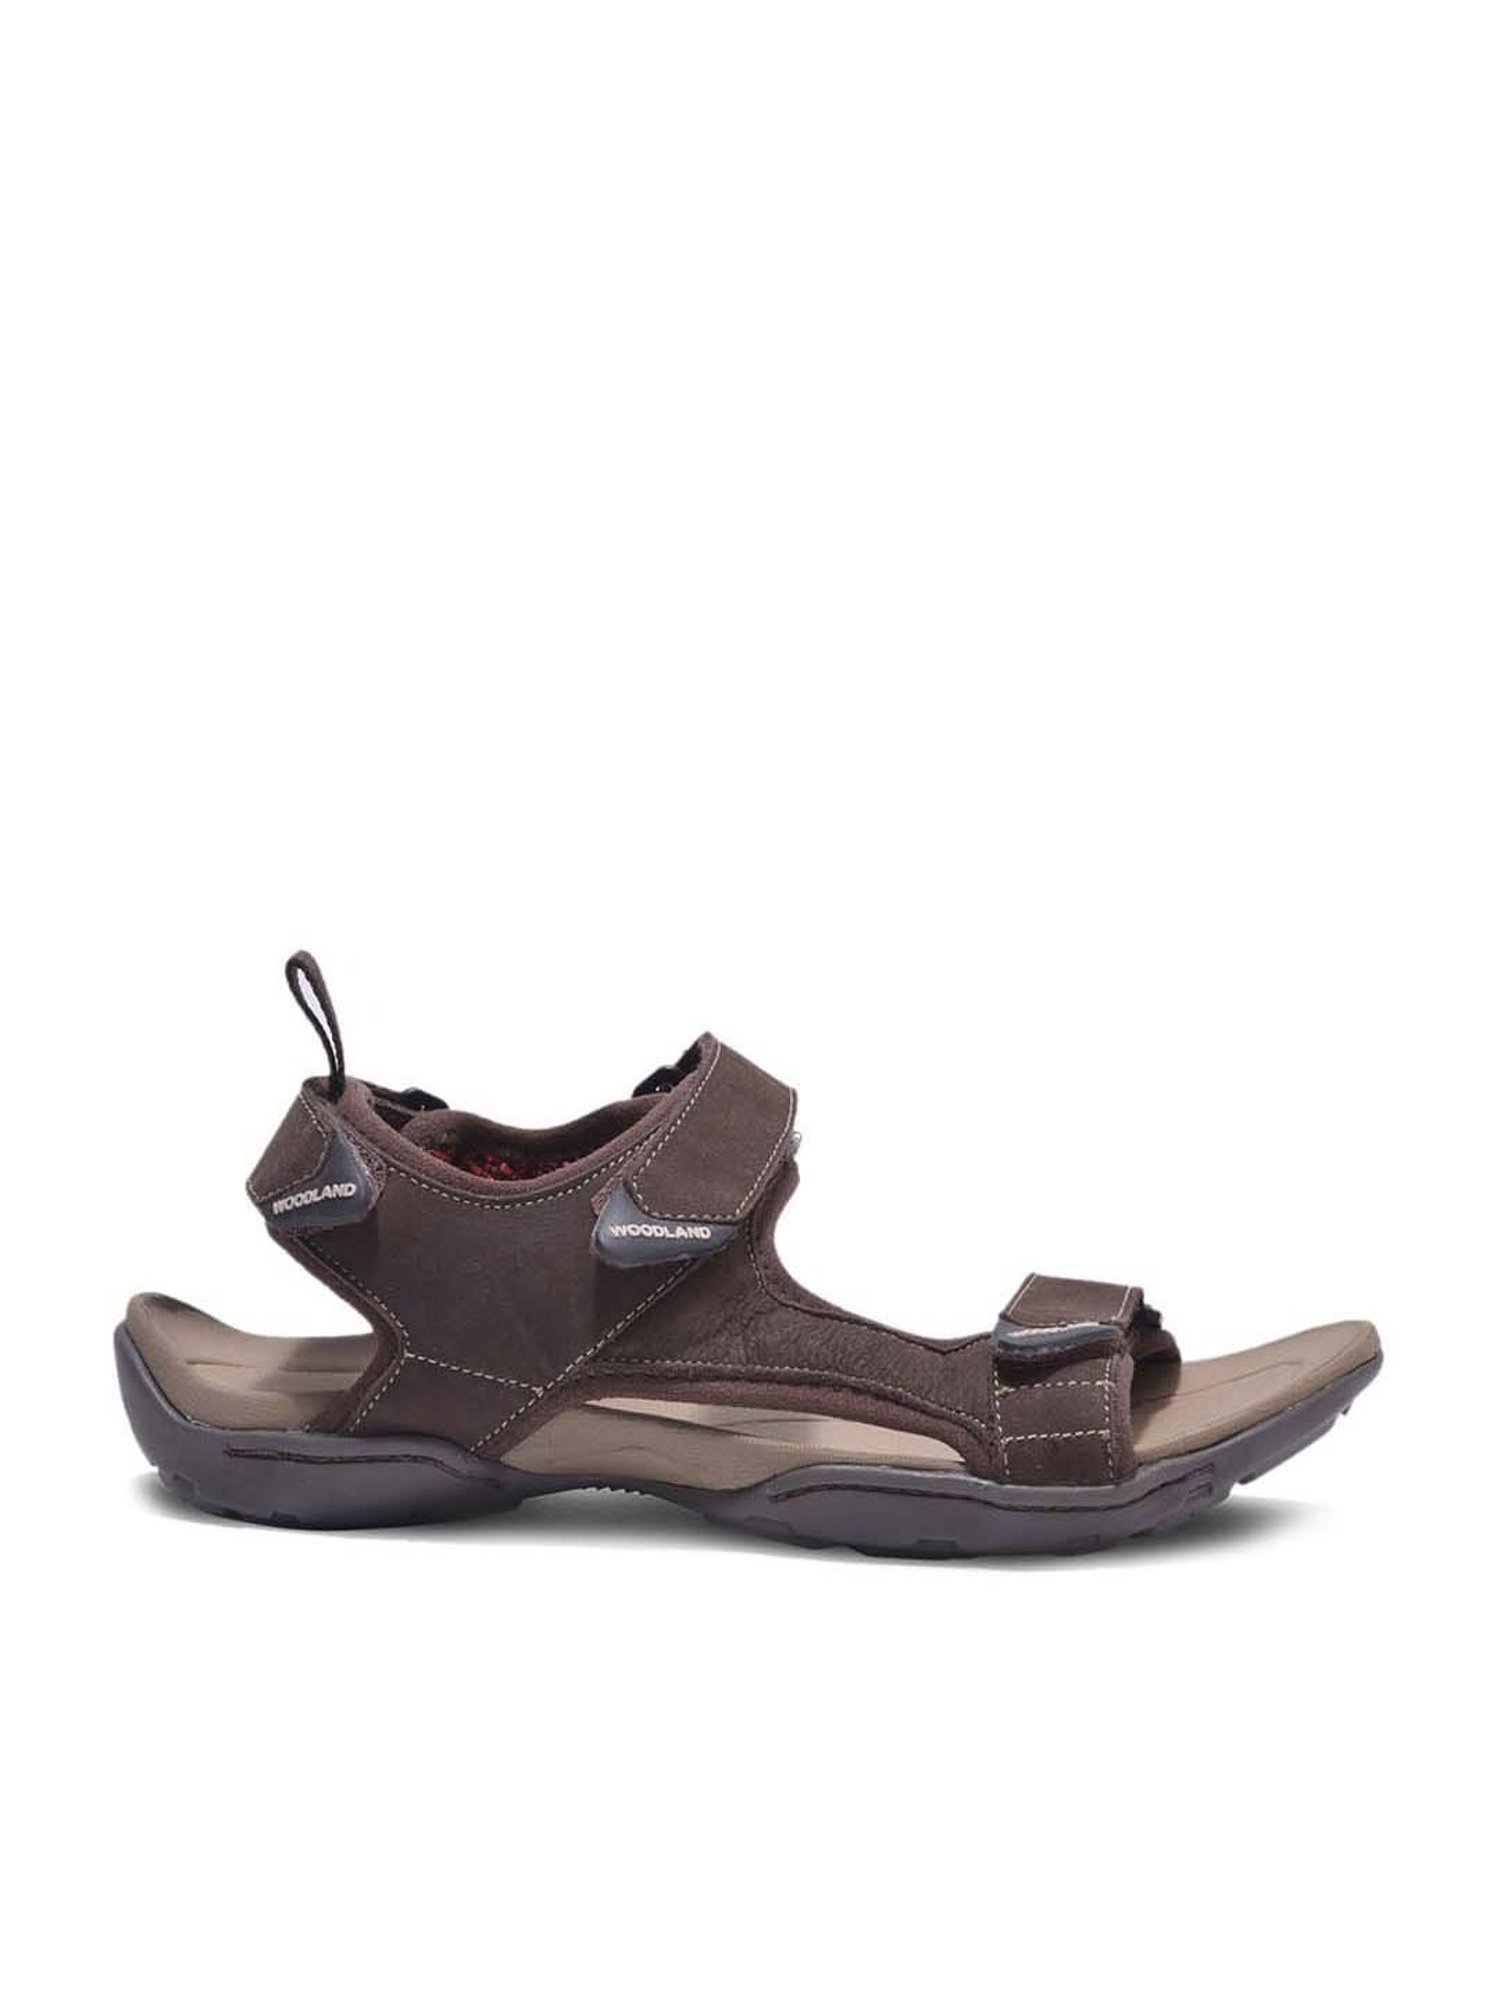 Buy WOODLAND Tan Mens Leather Slipon Sandals | Shoppers Stop